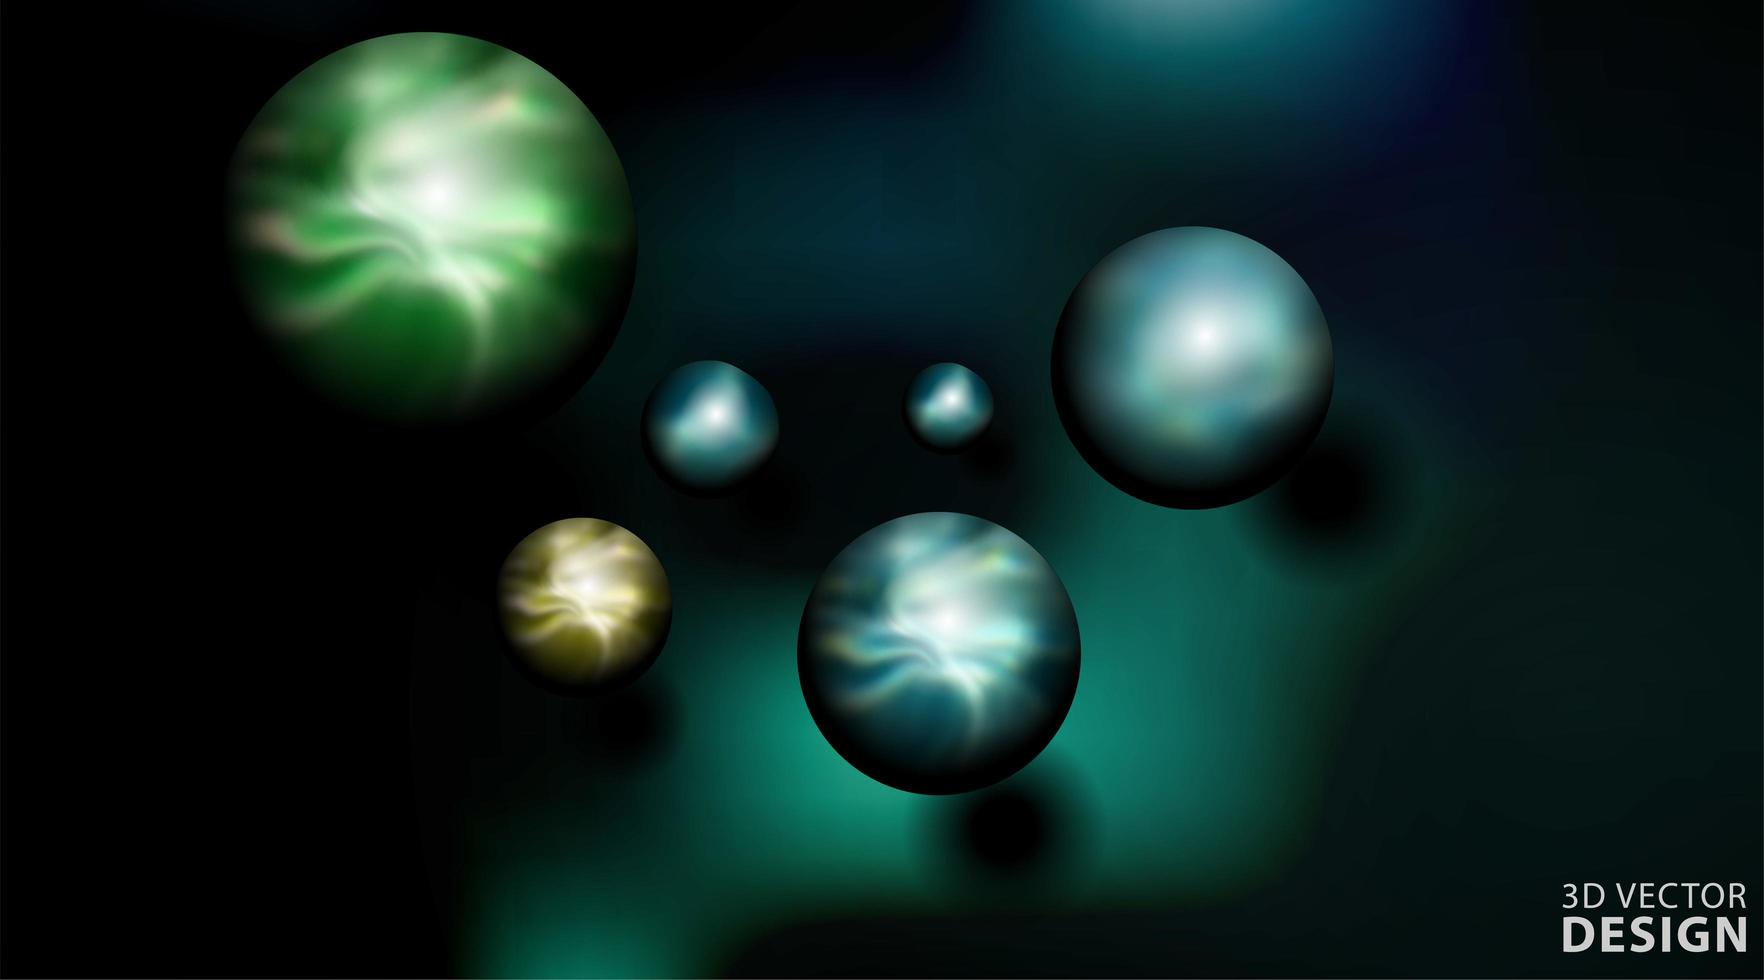 Realistic 3d ball vector illustration. Spheres in dark background